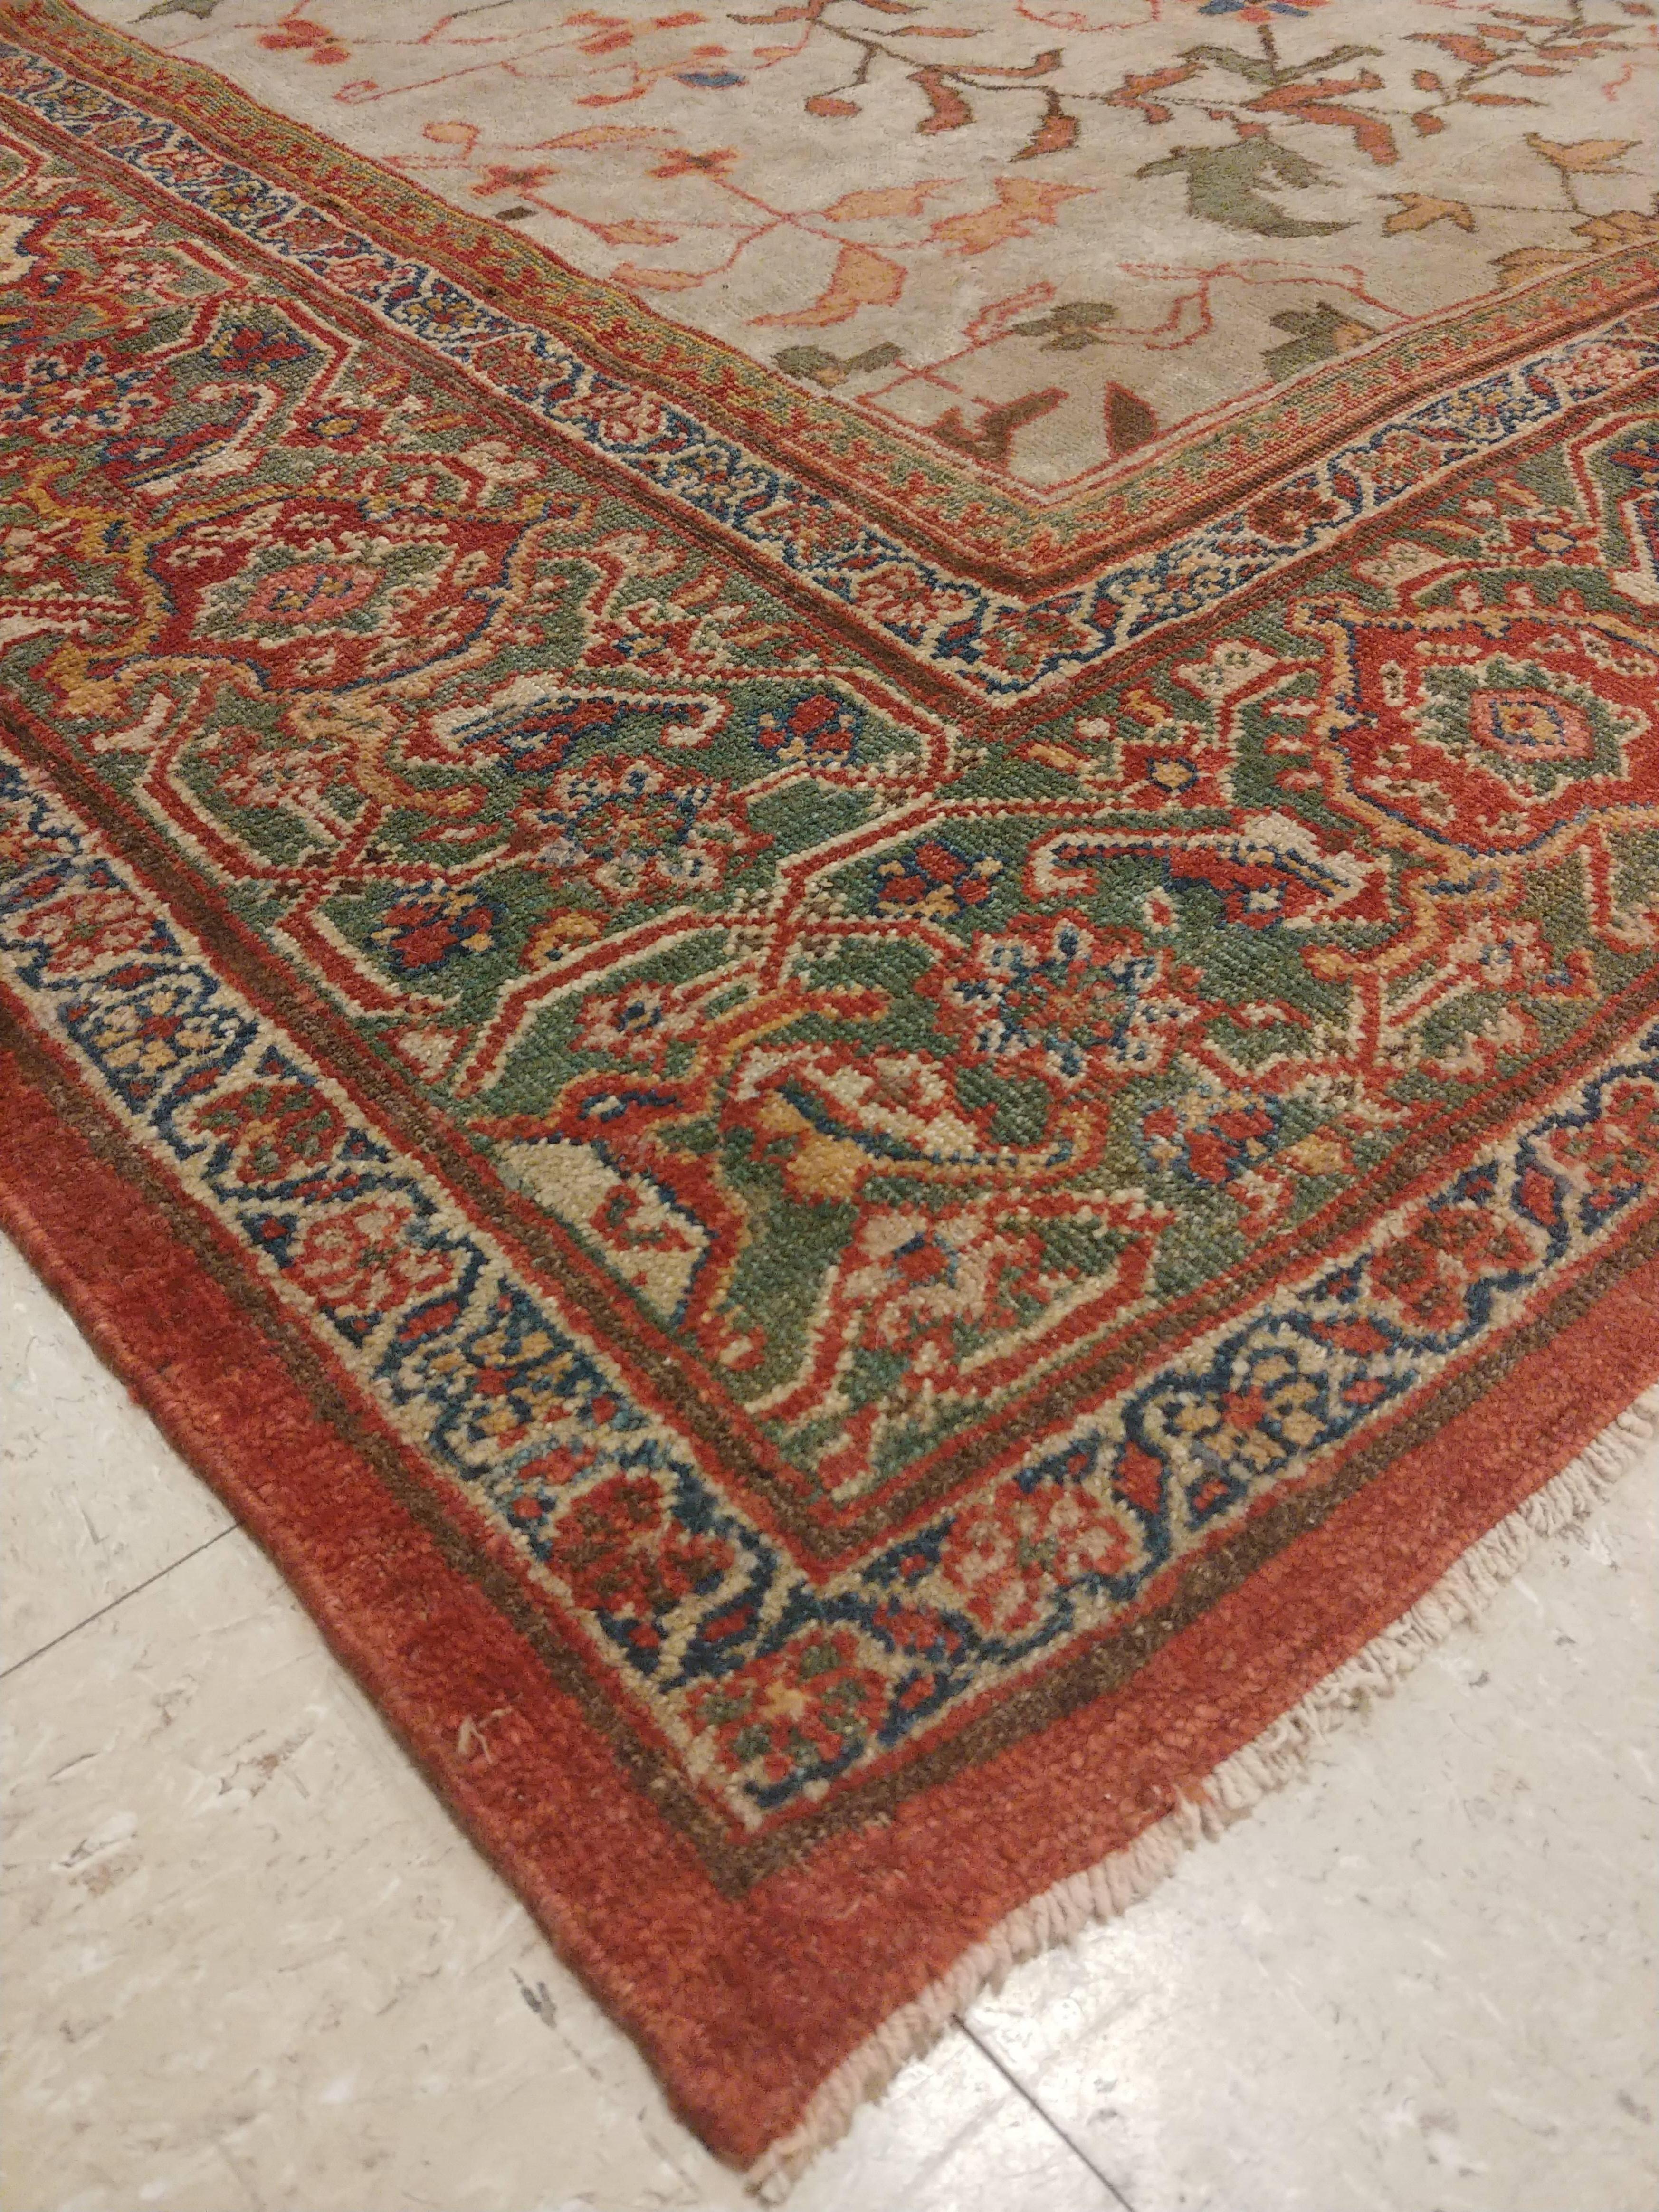 Antique Persian Sultanabad Carpet, Handmade Oriental Rug, Light Blue, Red, Green 1